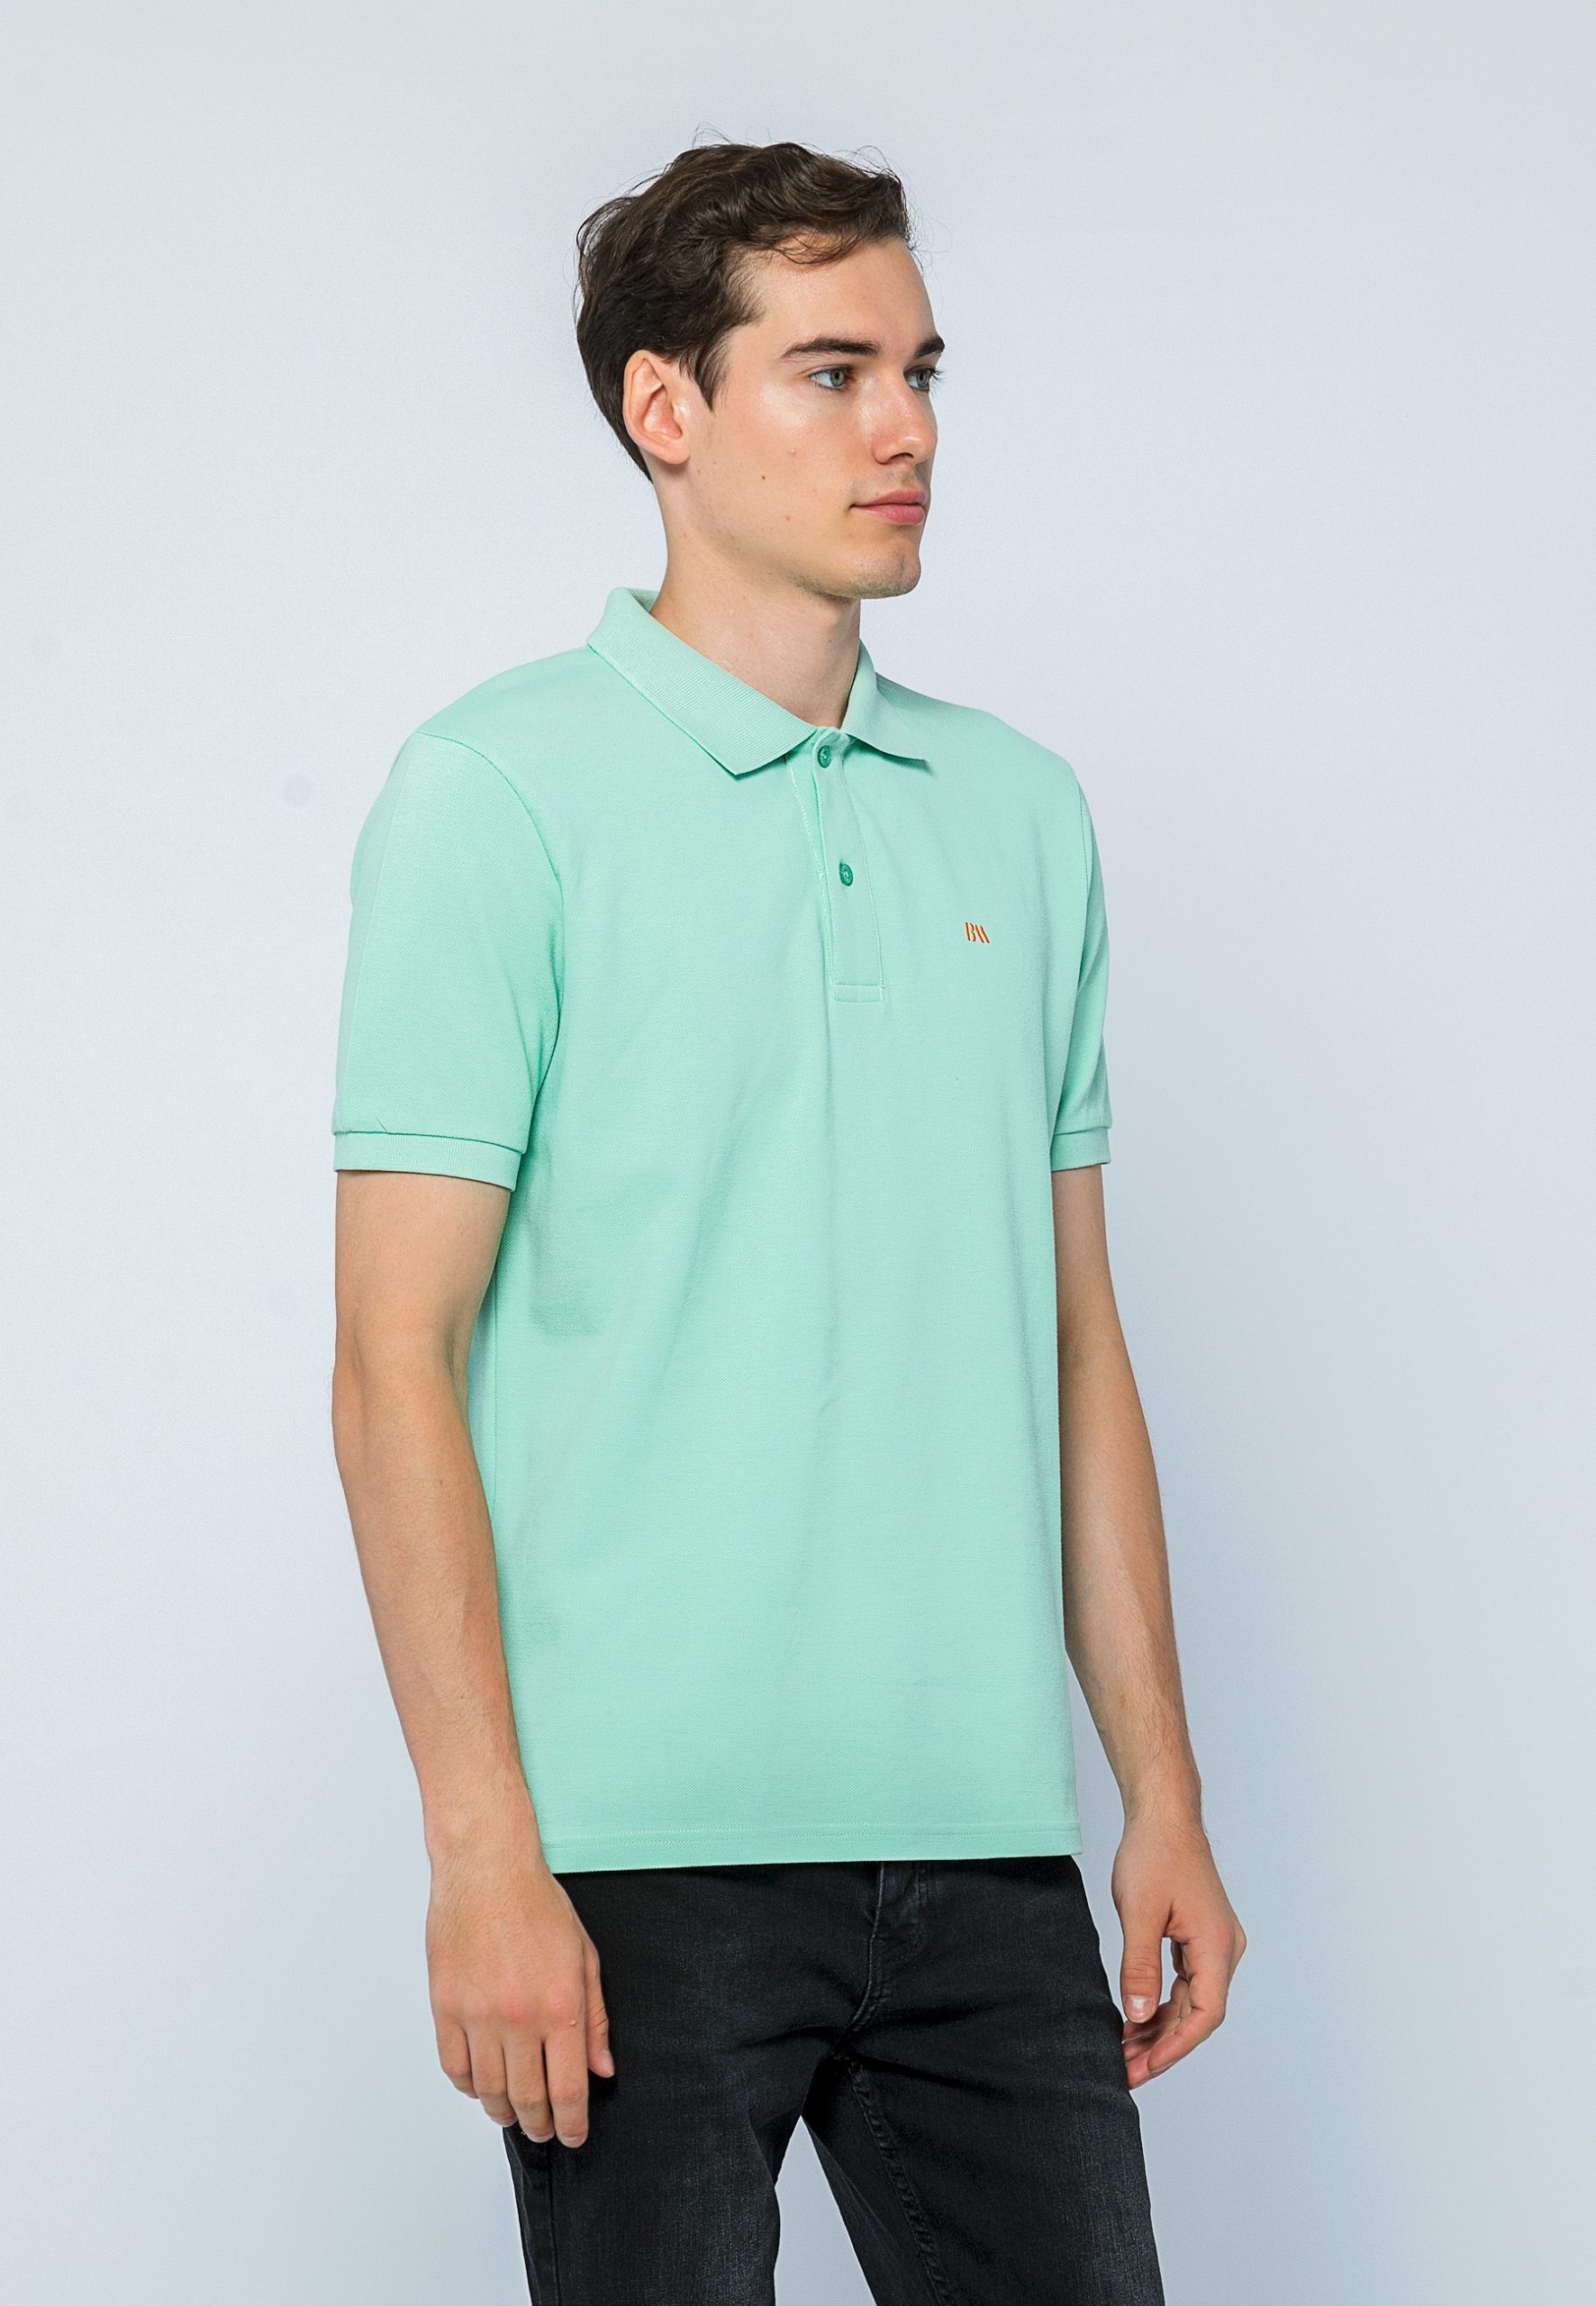 Basics&More Men's Mint Polo Shirt Short Sleeve - Basics&More